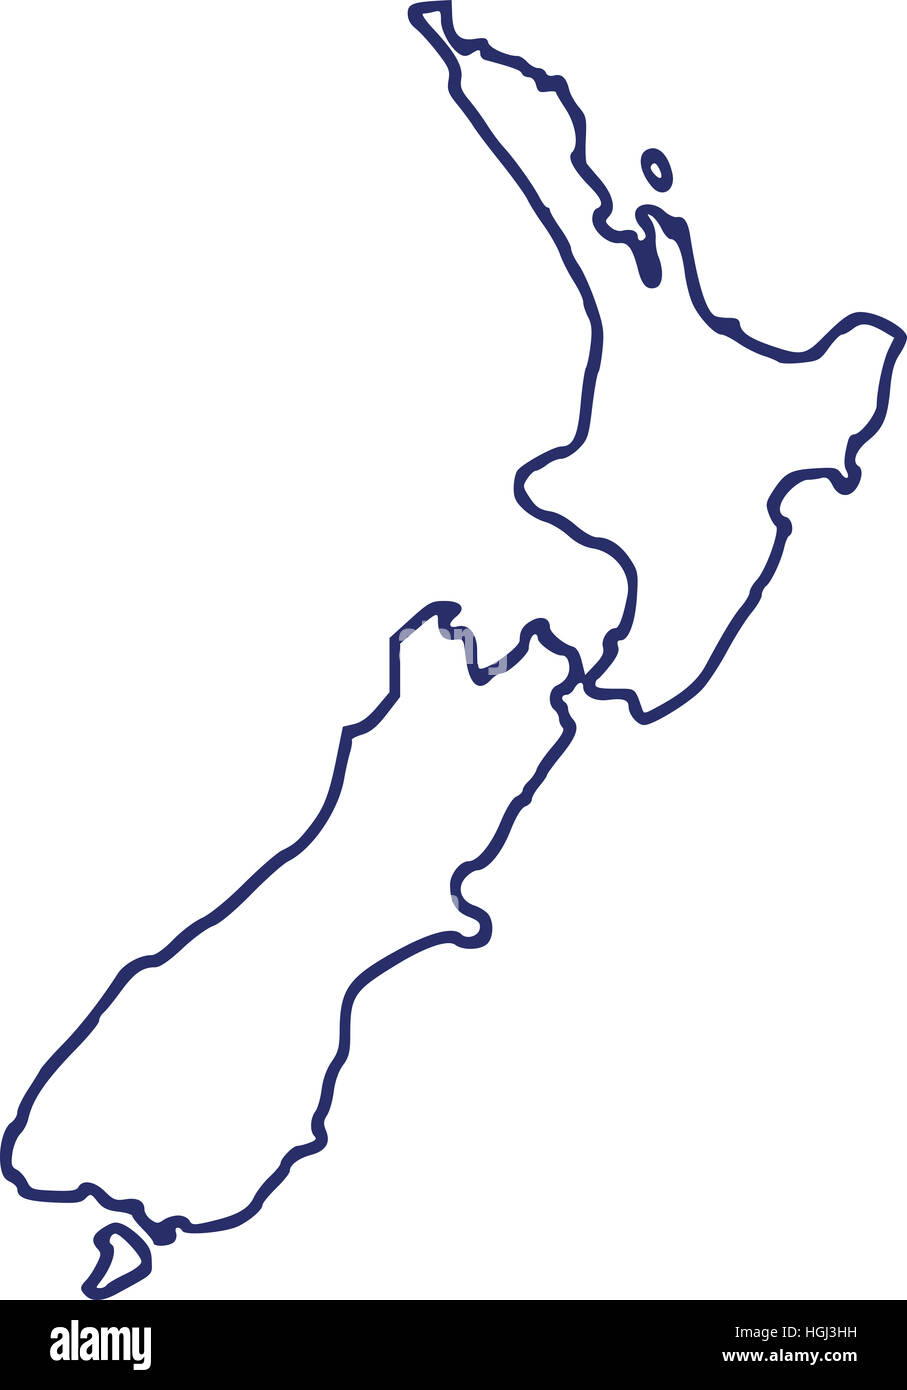 New Zealand map contour Stock Photo